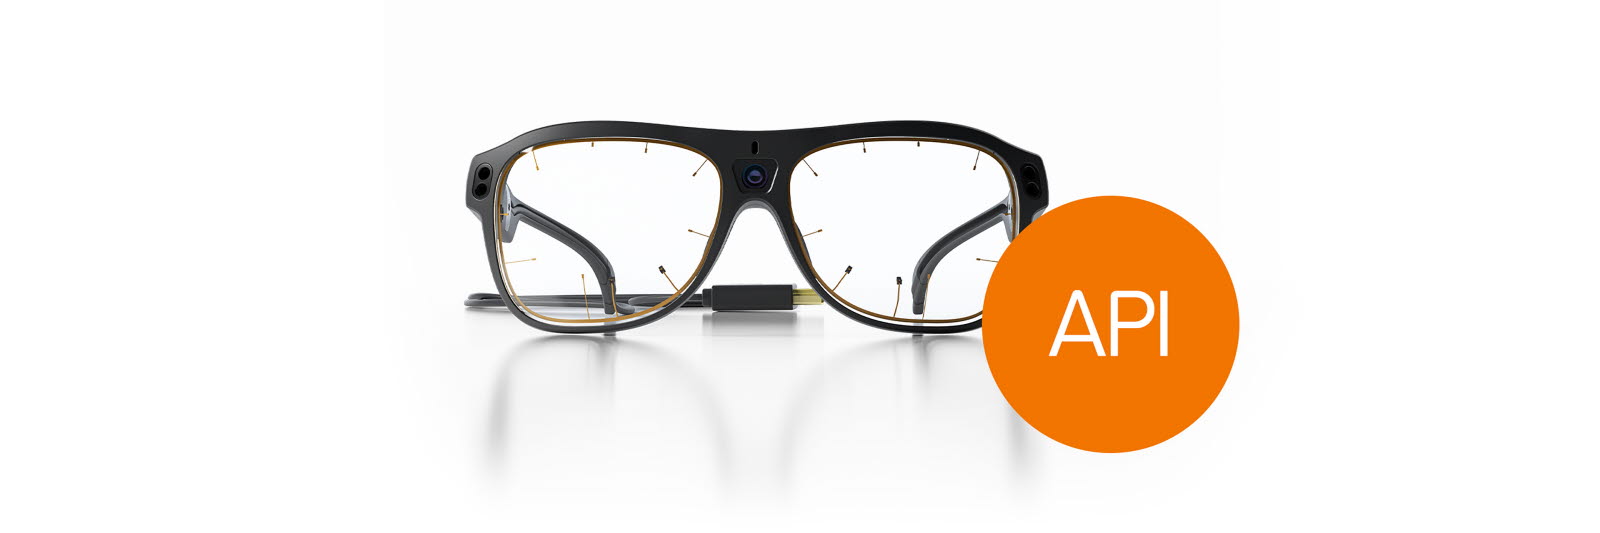 Tobii Pro Glasses 3 API software